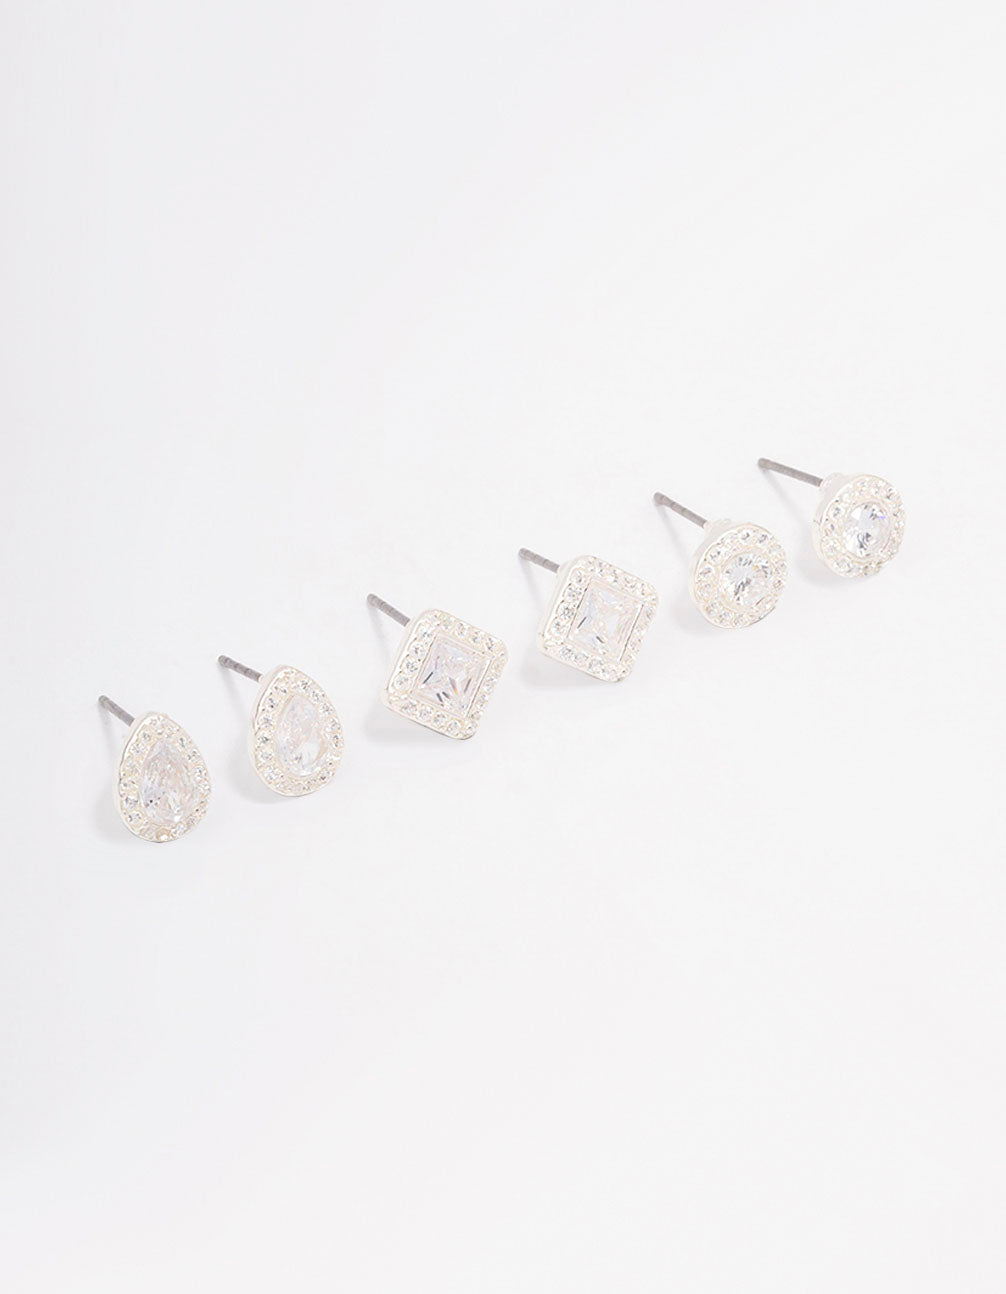 Leo Certified 14K White Gold Diamond Bridal Ring Set| 0.99CT Center| 1.45CT  TDW| 6.6 Grams| Size 6.50